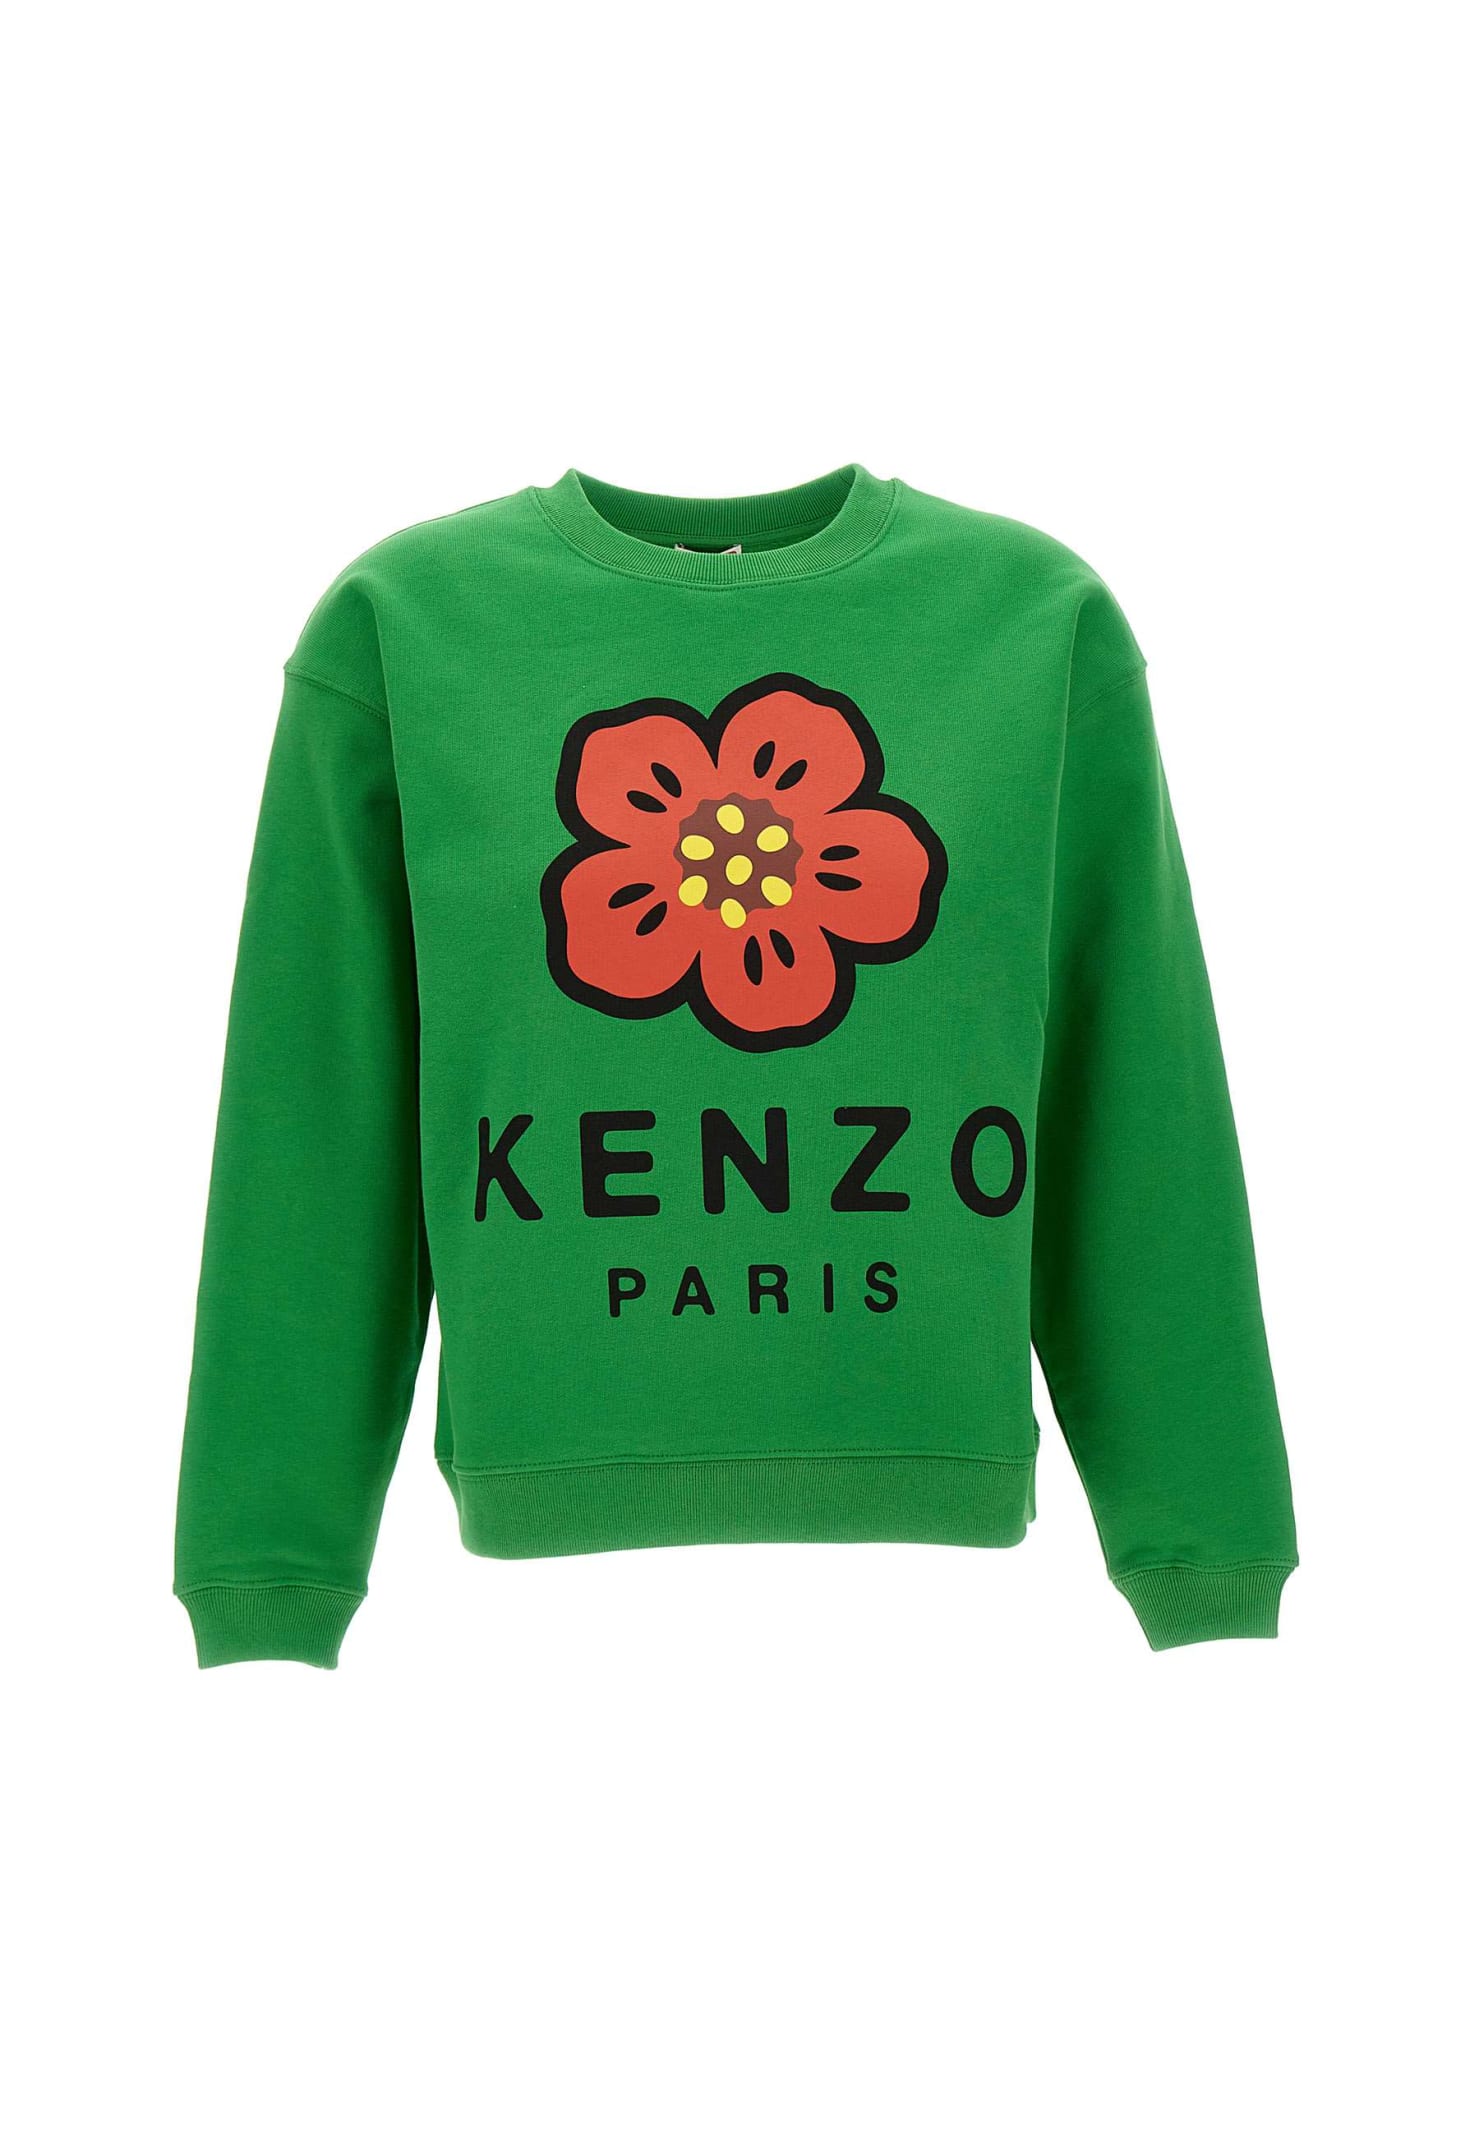 Kenzo Paris paris Regular Cotton Sweatshirt